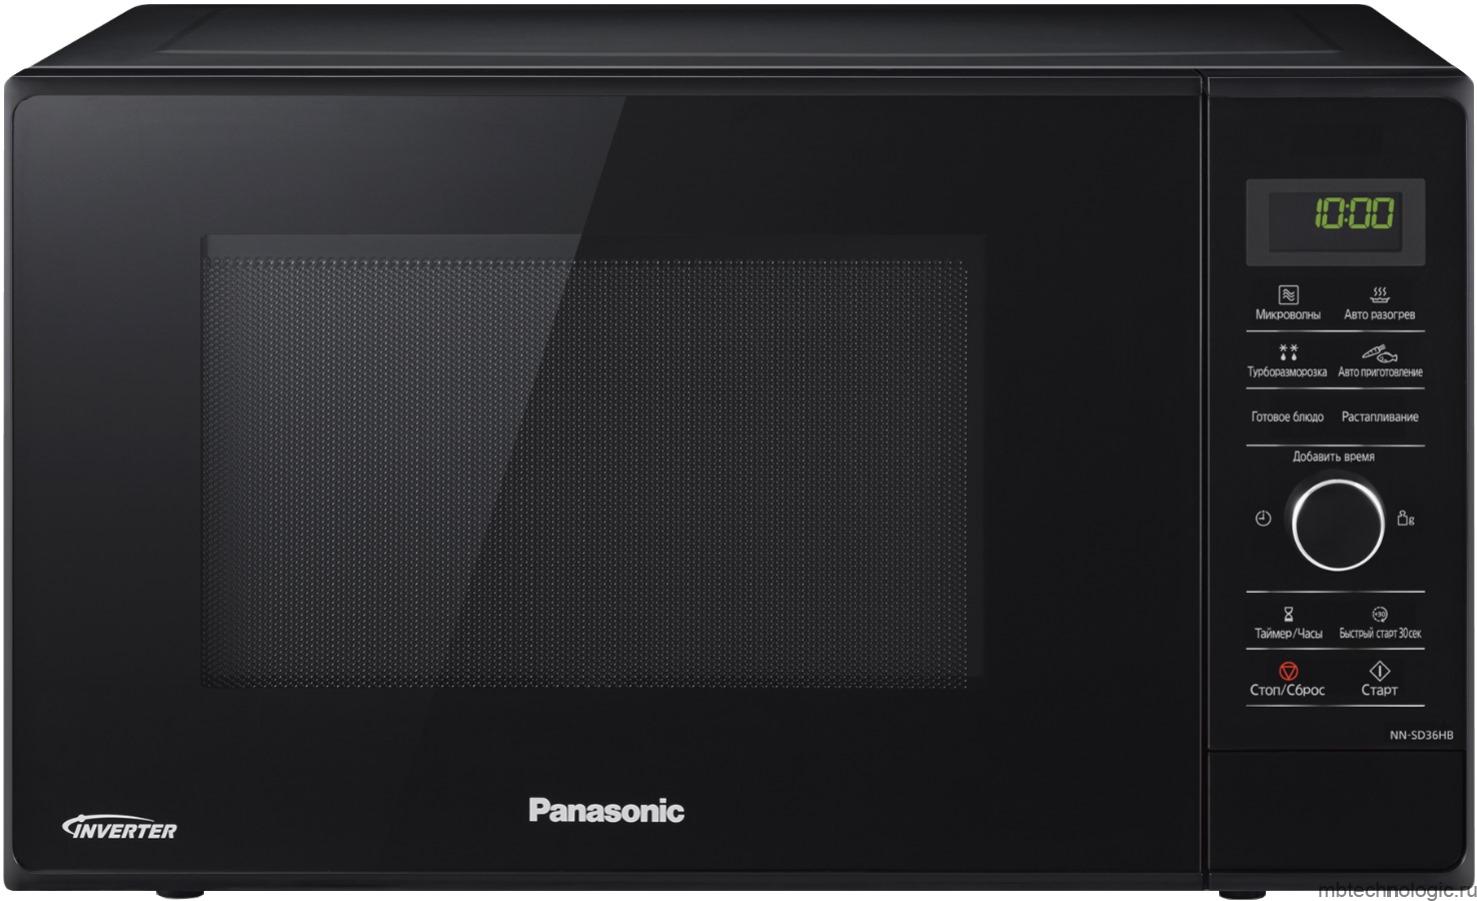 Panasonic NN-SD36HB